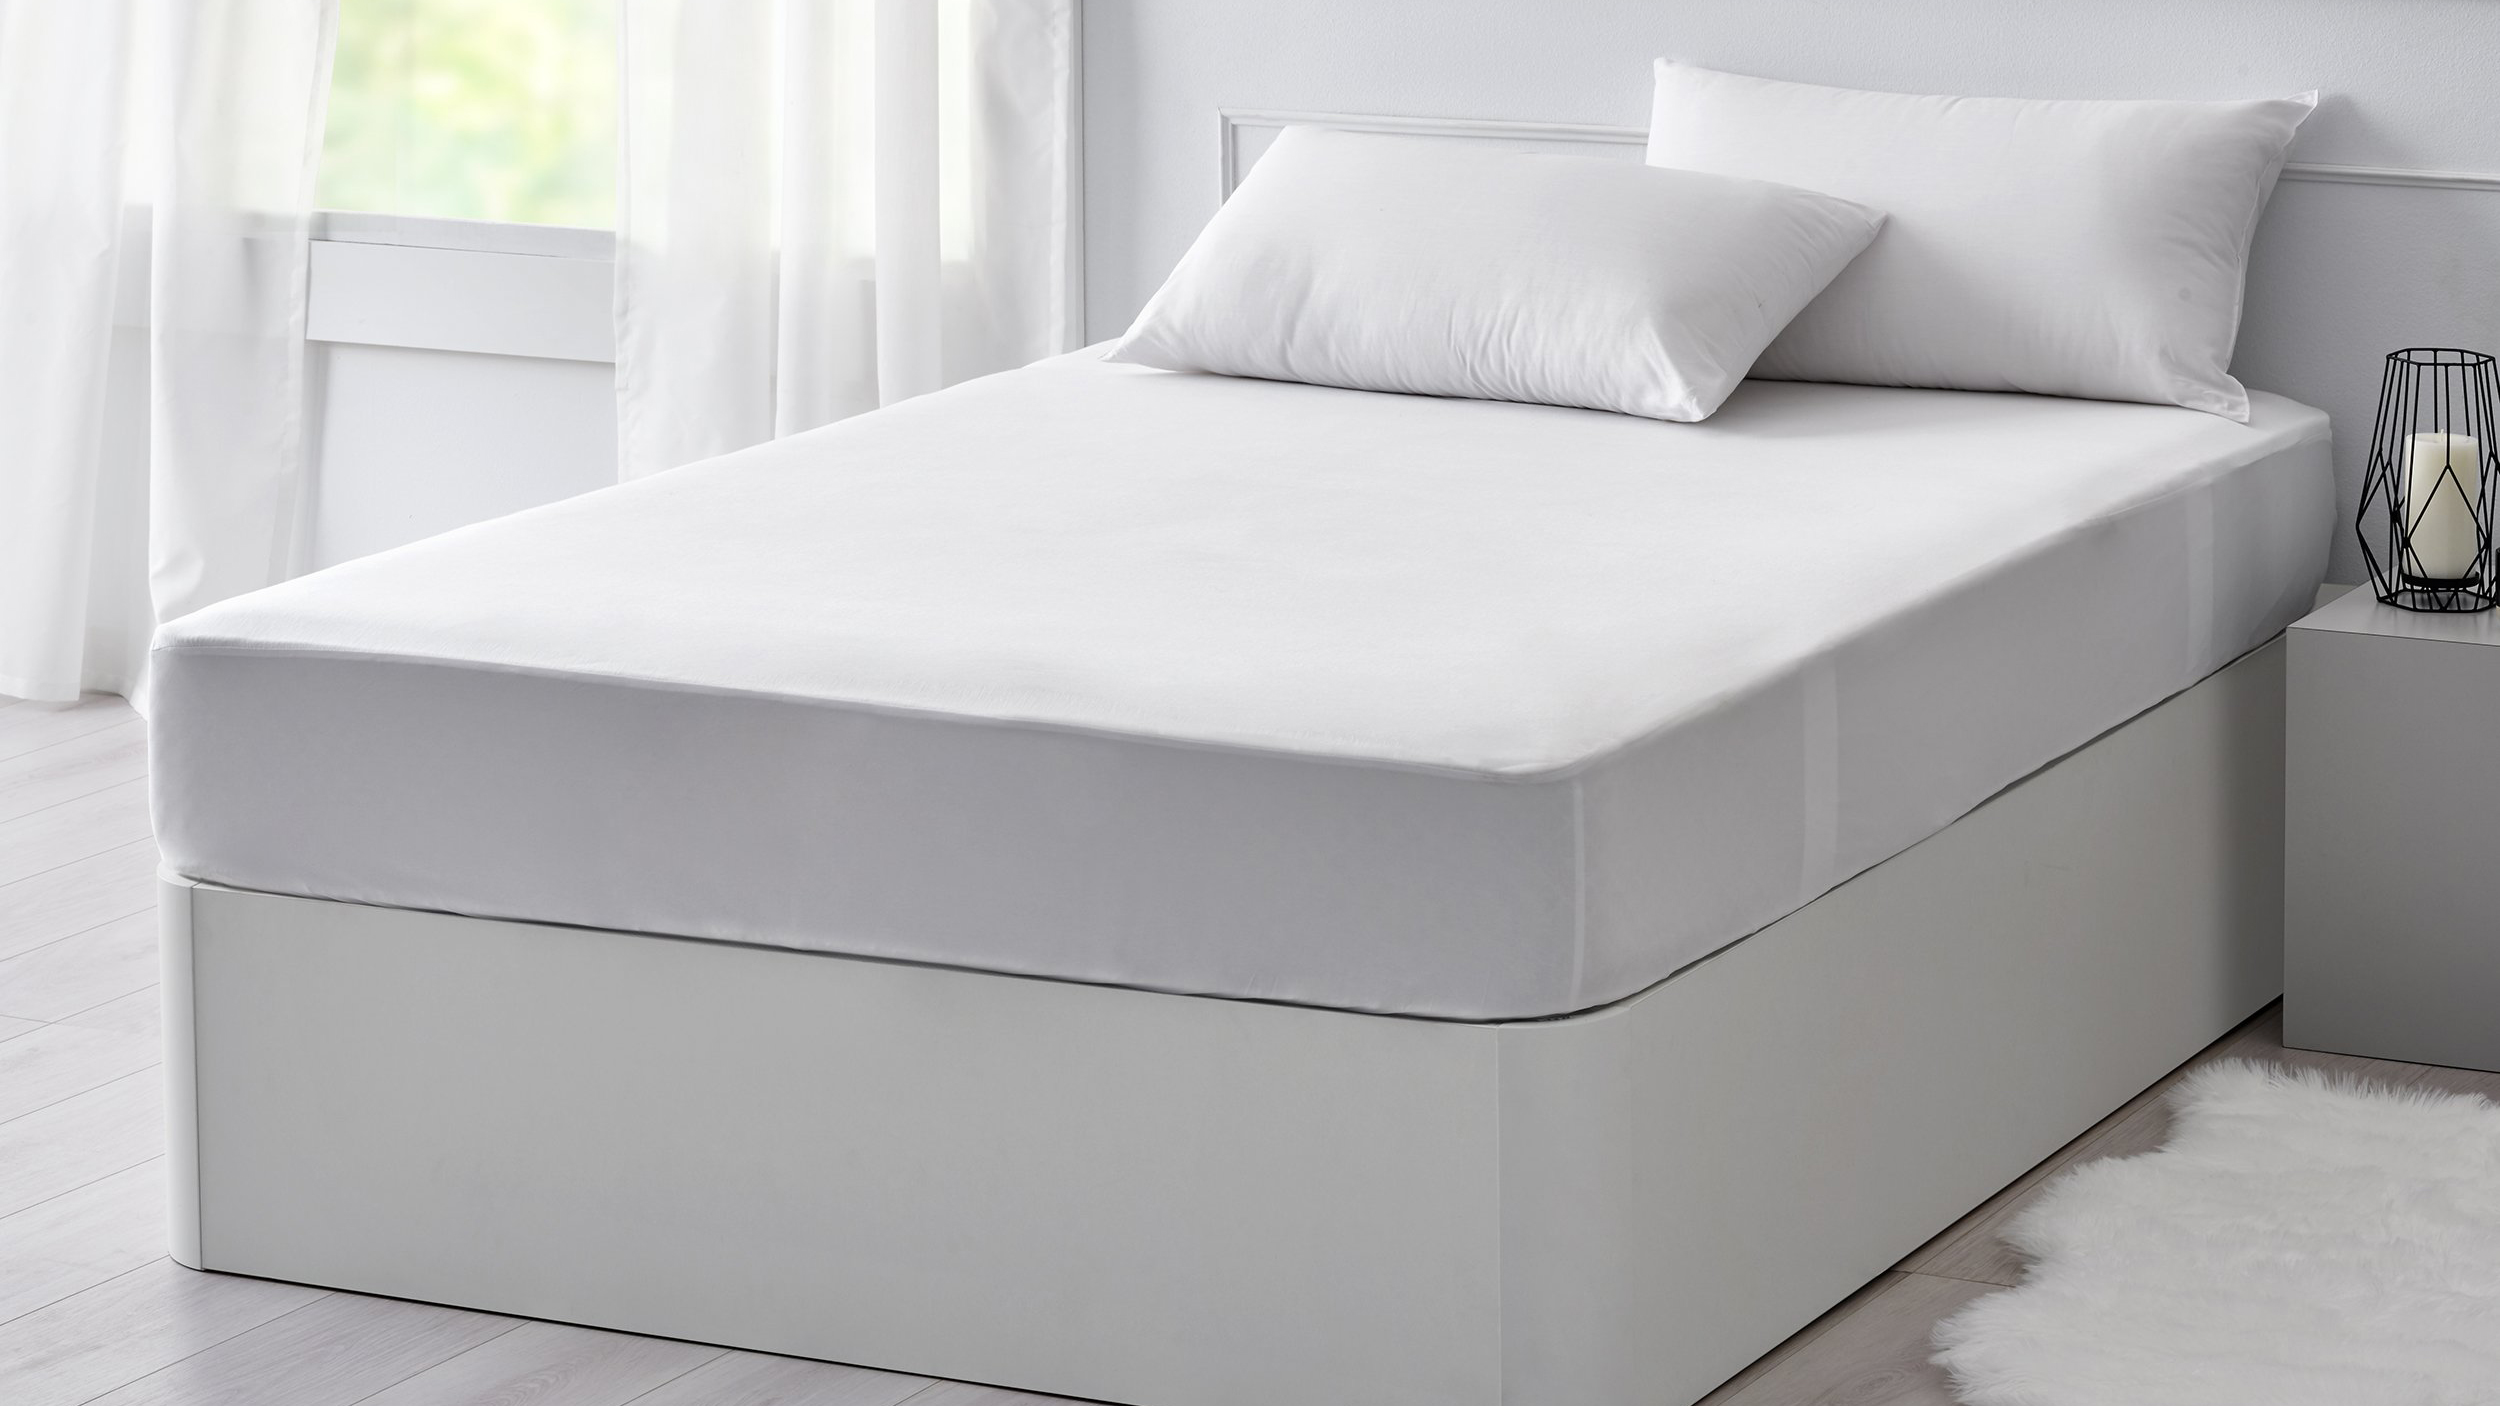 Bed Sizes Australian Mattress Dimensions In 2020 Bedbuyer